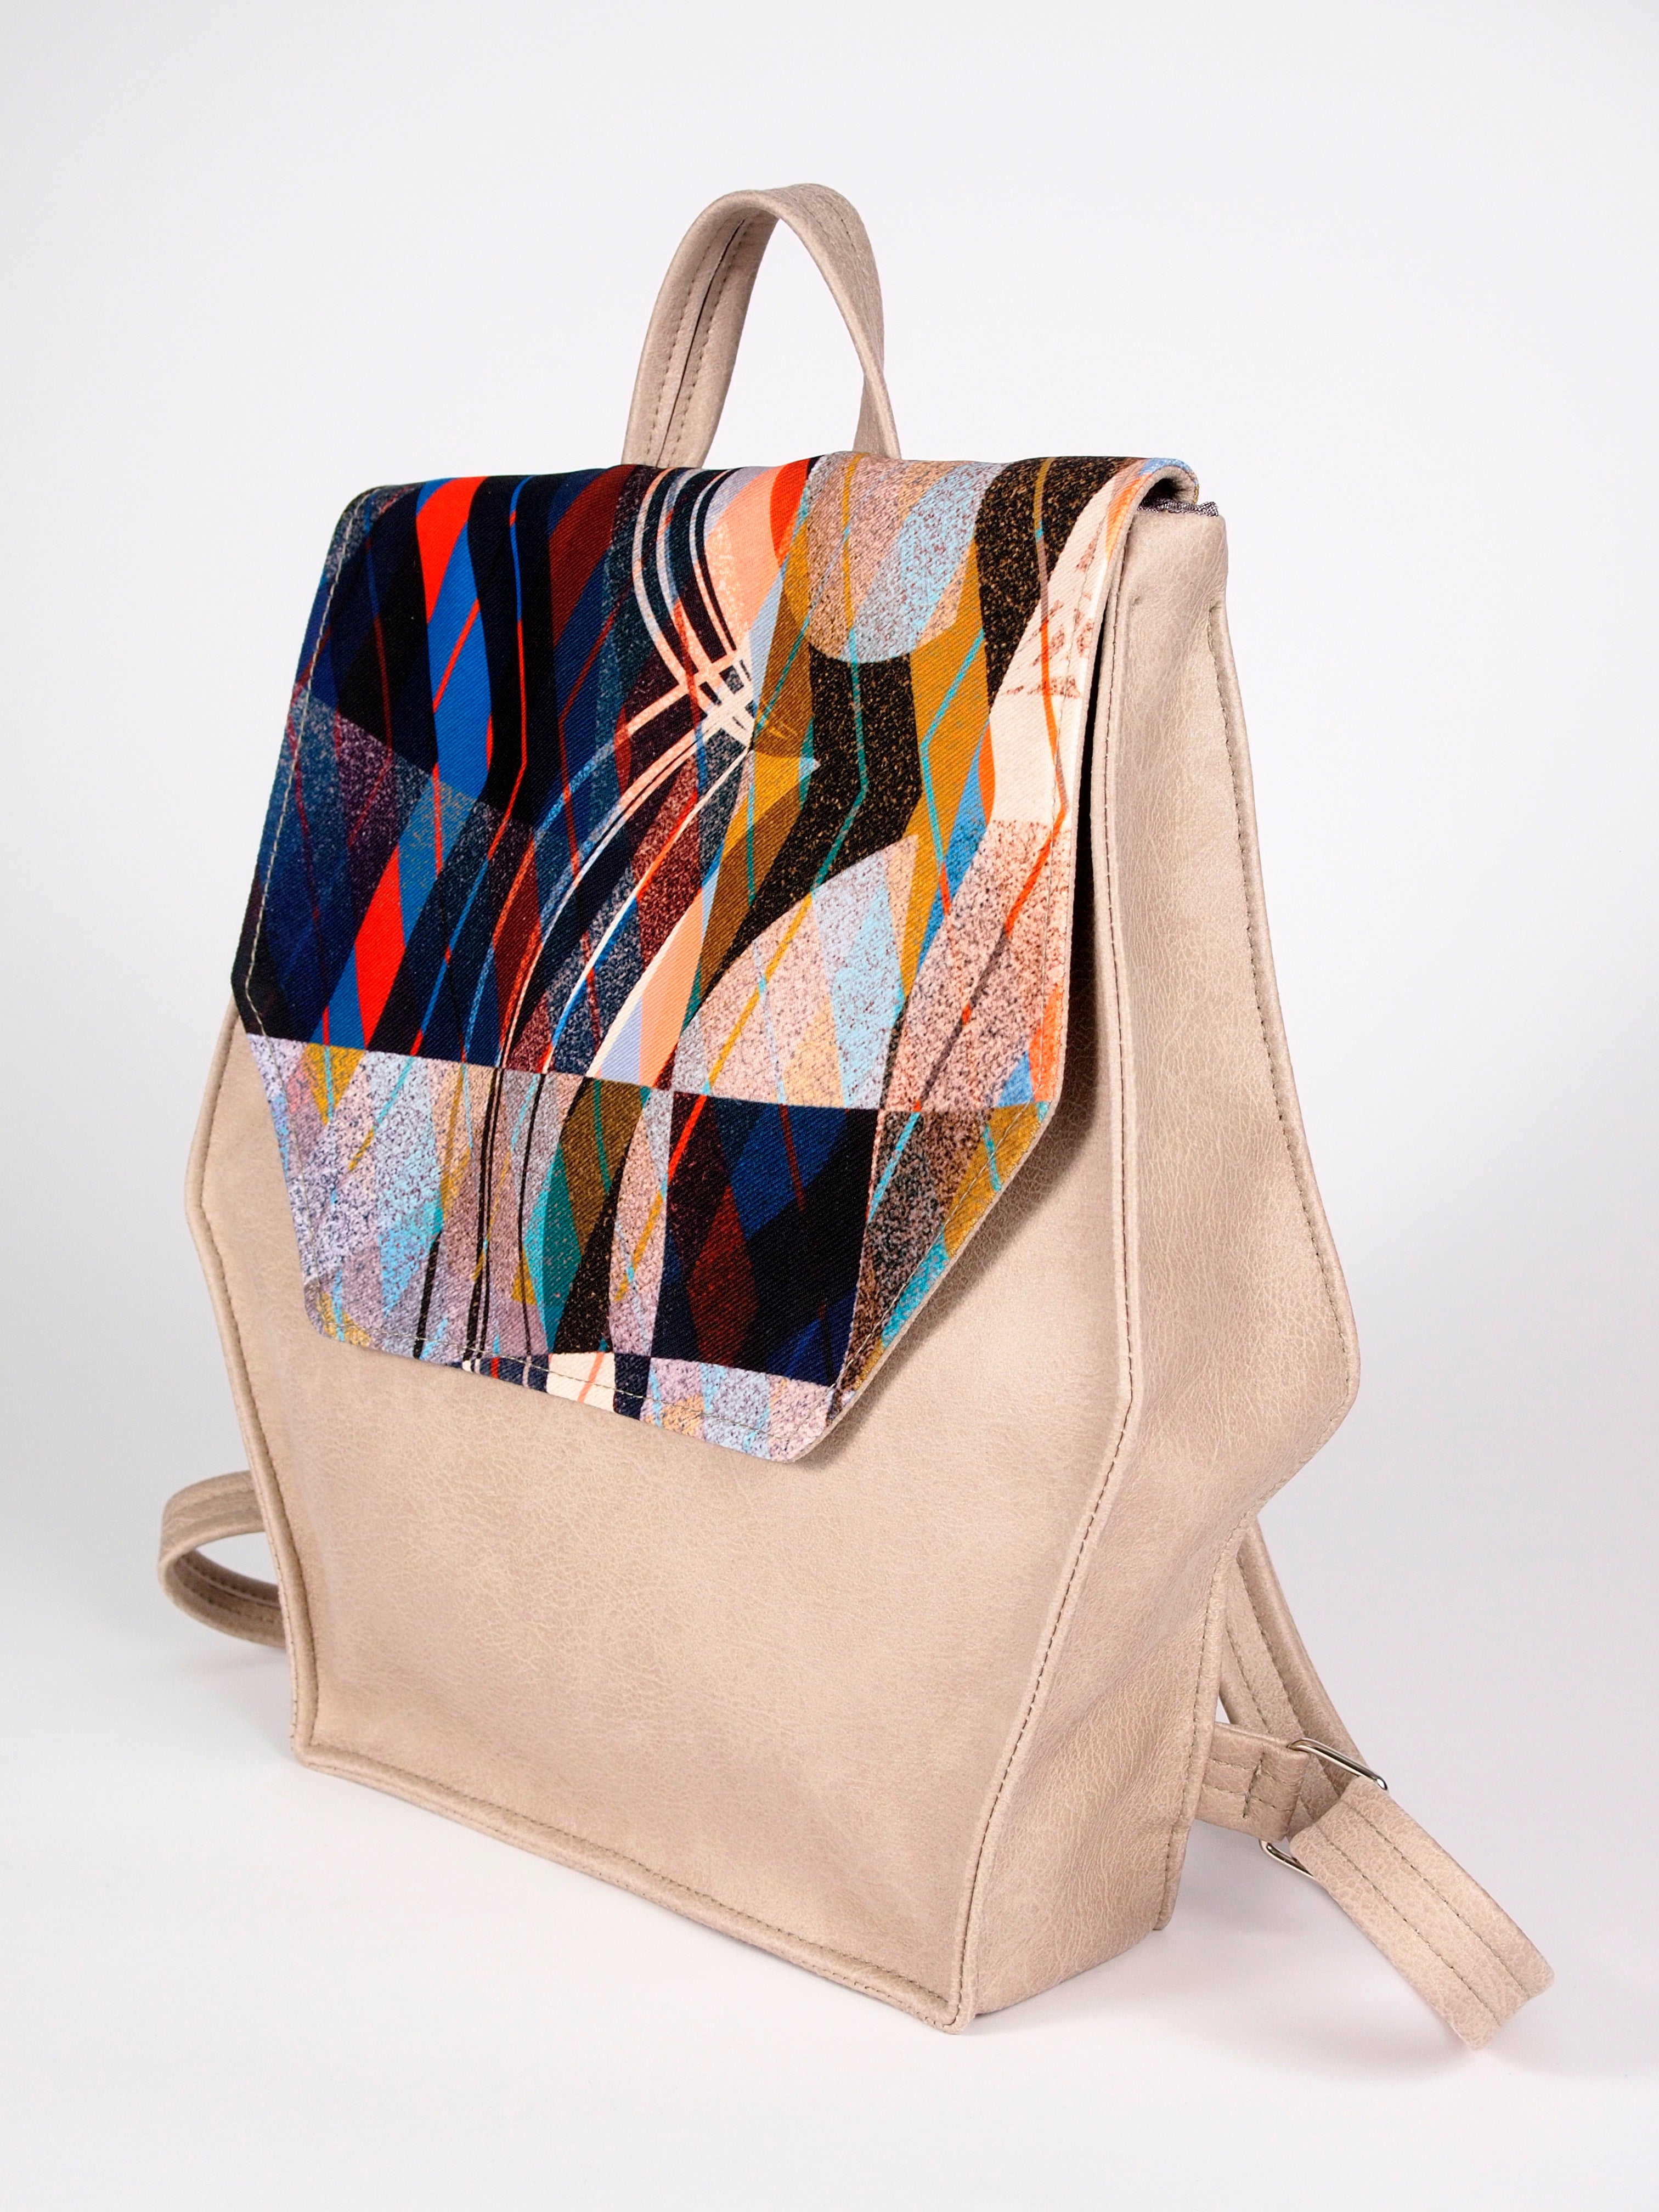 Bardo backpack torero - On the beach - Premium  from BARDO ART WORKS - Just lv82.00! Shop now at BARDO ART WORKS